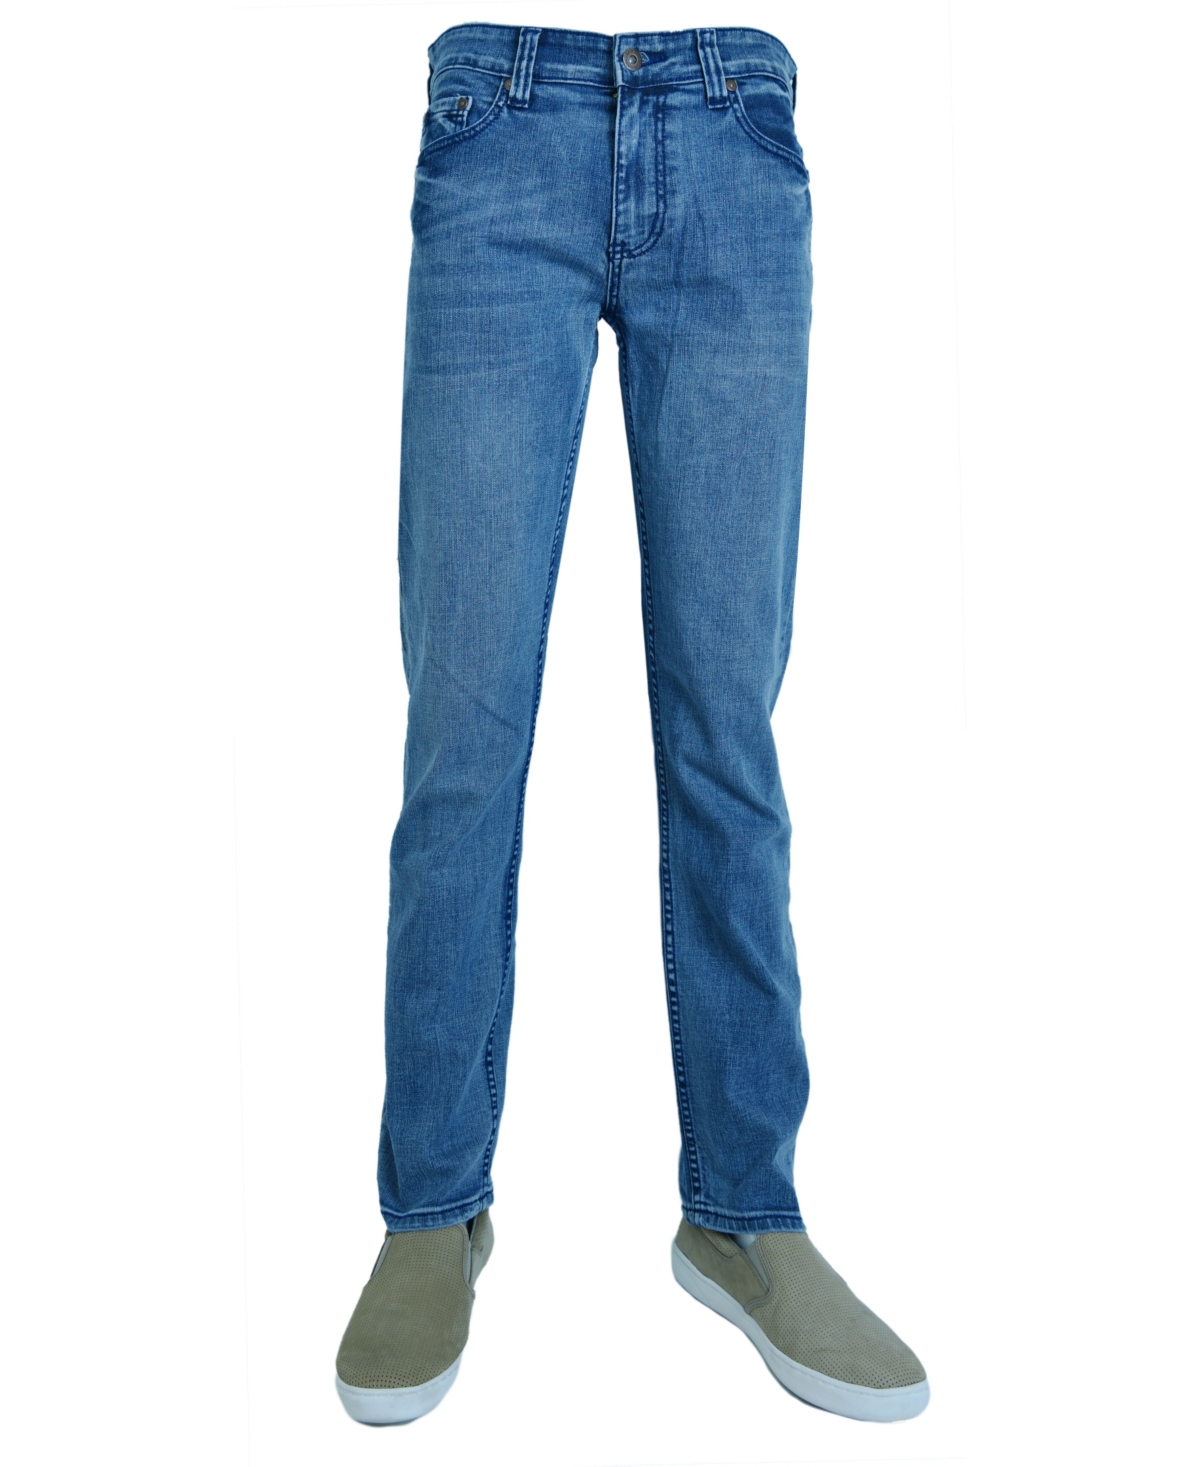 Men's Fashion Slim Tapered Jeans Denim - Light Blue